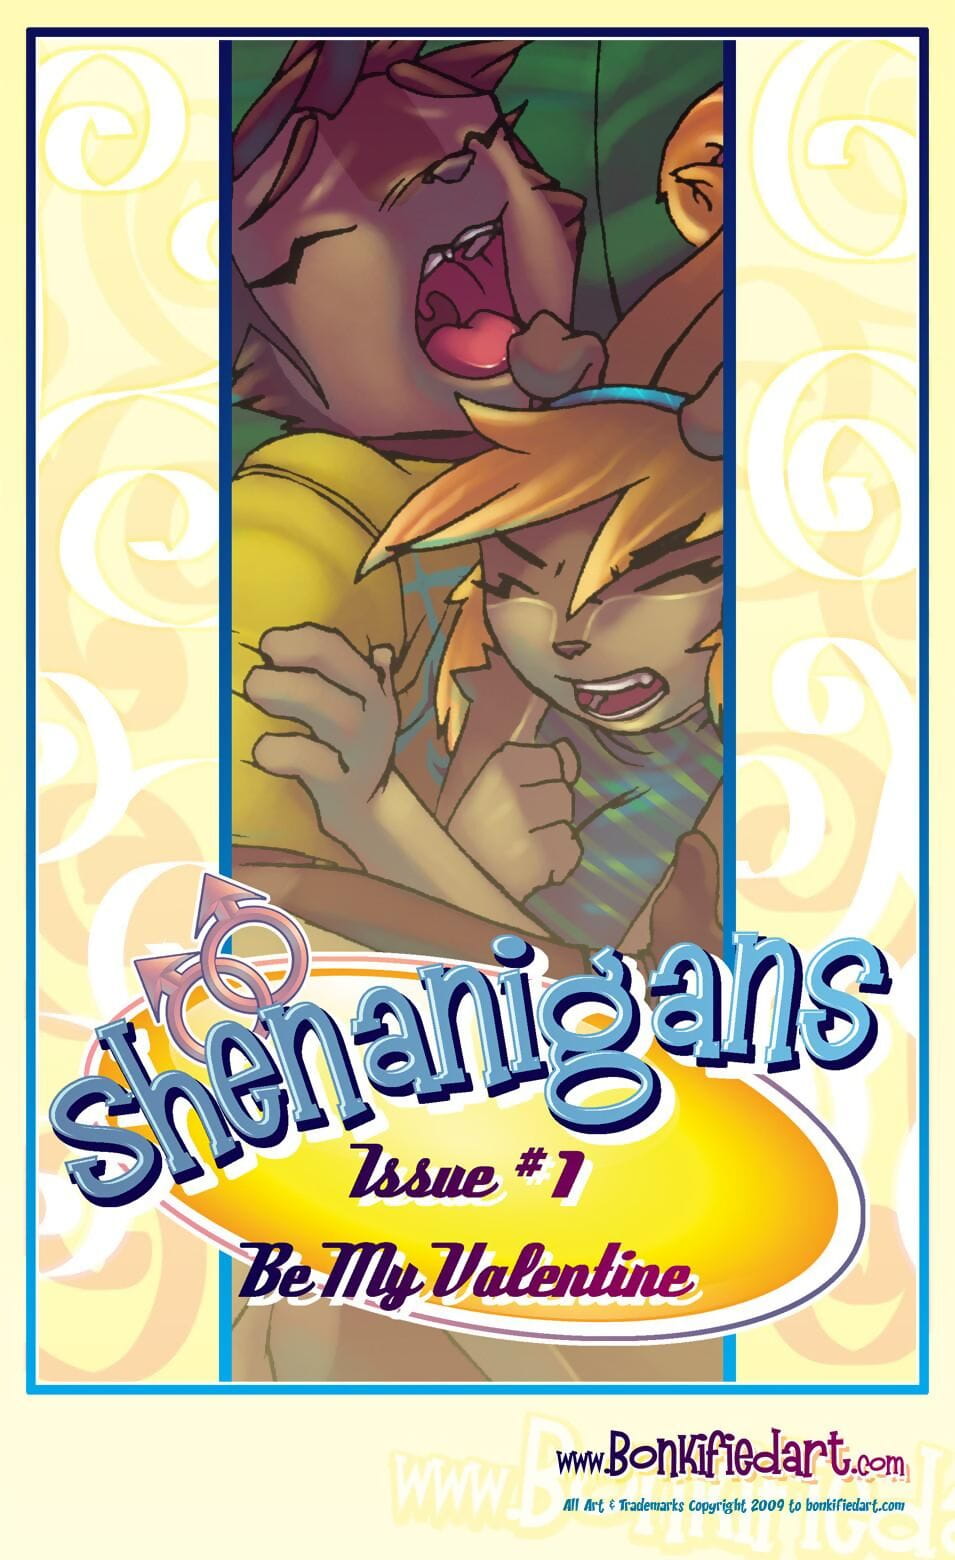 Shenanigans - Issue #1: Be My Valentine page 1